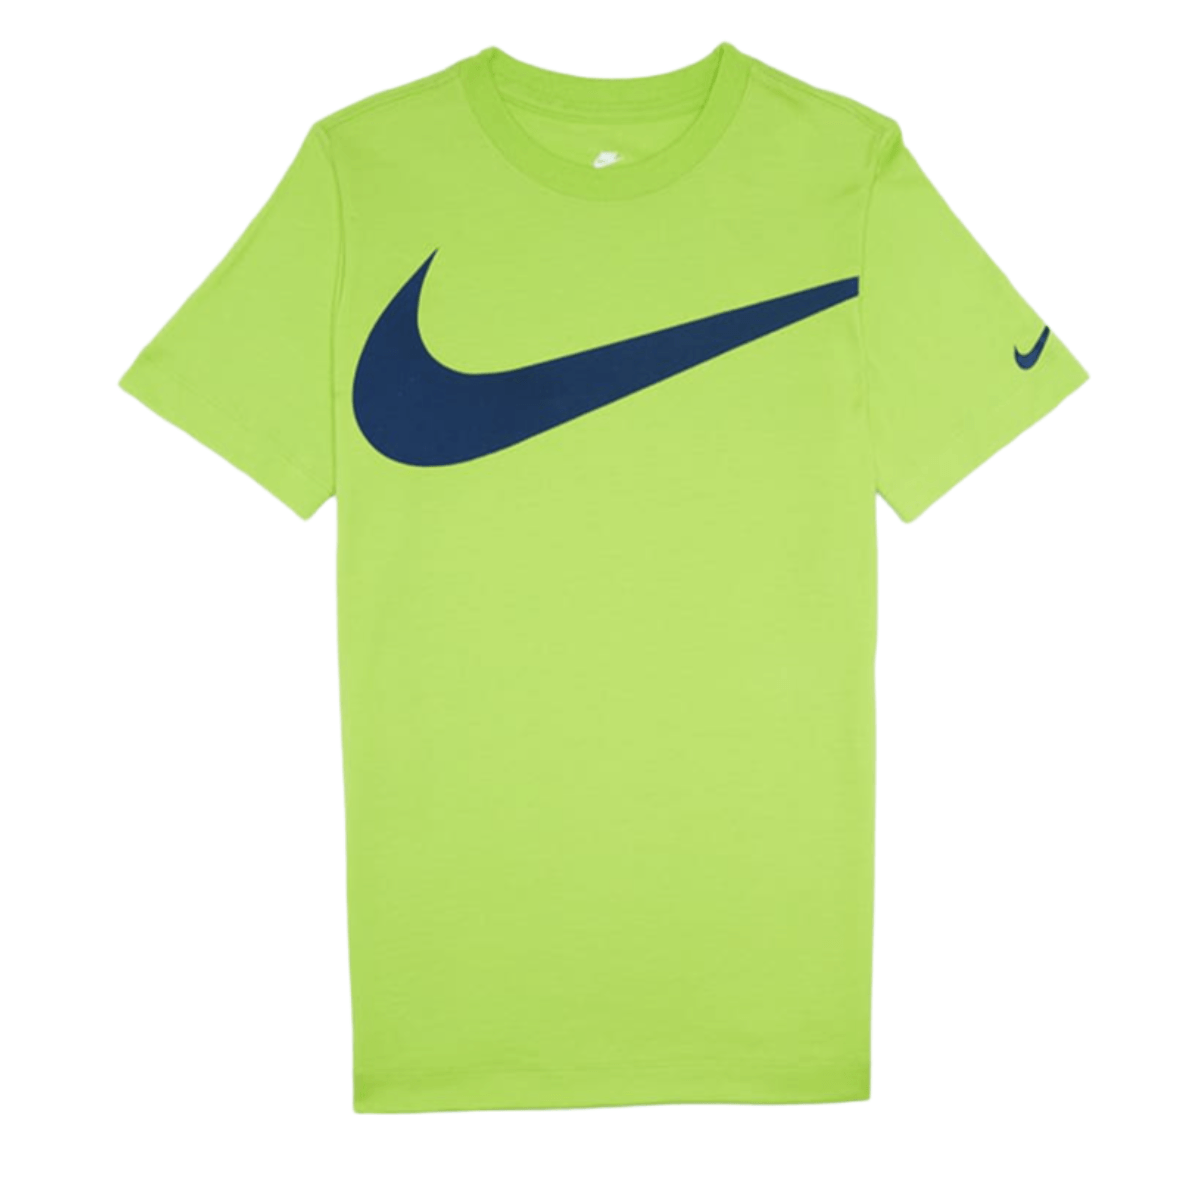 Nike Sportswear Tee - Boys' - Bobwards.com